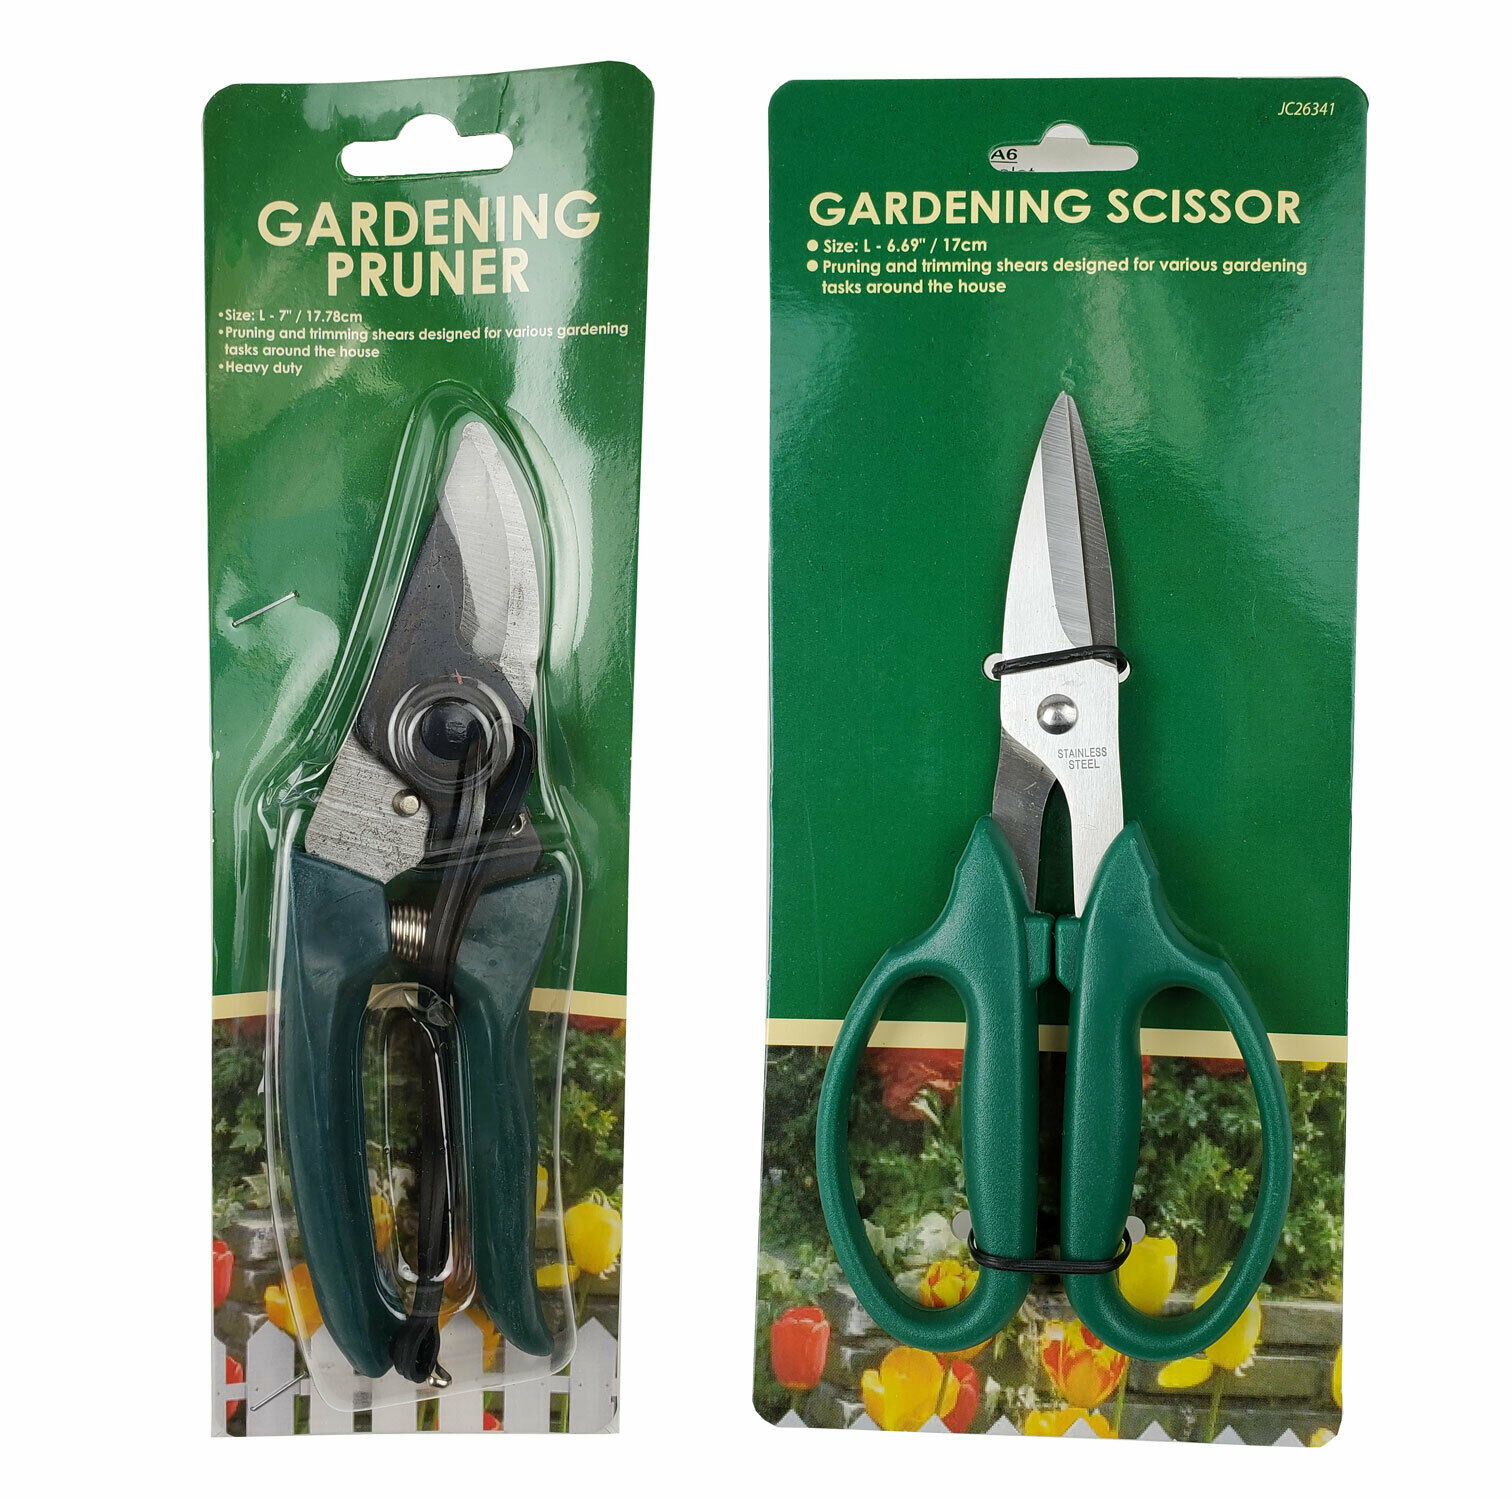 2 Pcs Set Gardening Pruner & Scissor Tool For Pruning Trimming Garden Works